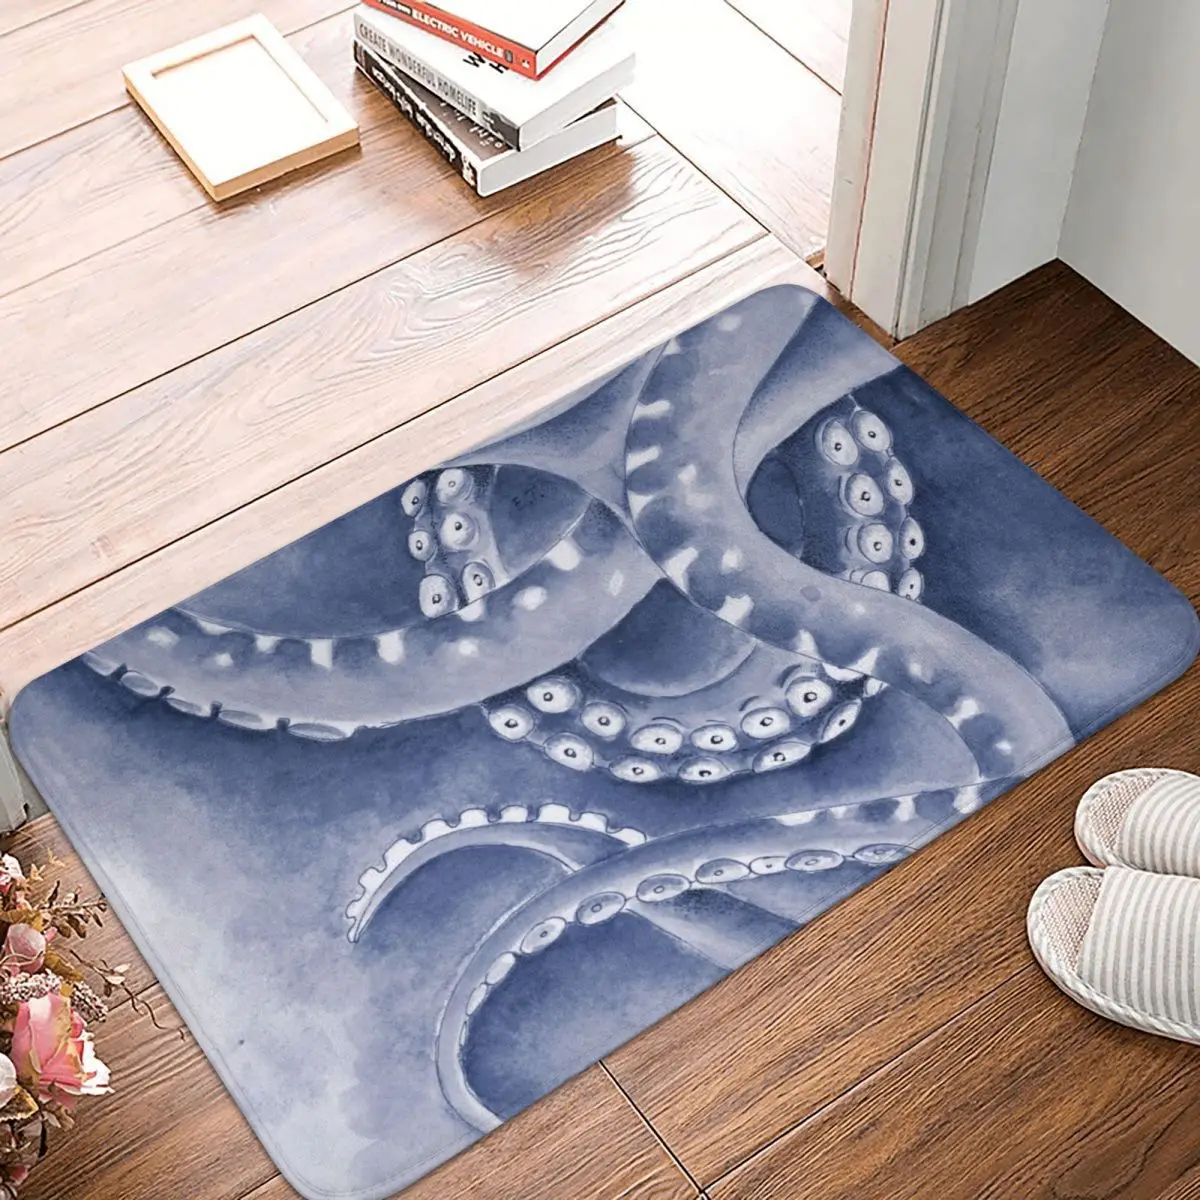 

Octopus Kraken Monster Doormat Carpet Mat Rug Polyester PVC Non-Slip Floor Decor Bath Bathroom Kitchen Living Room 40x60